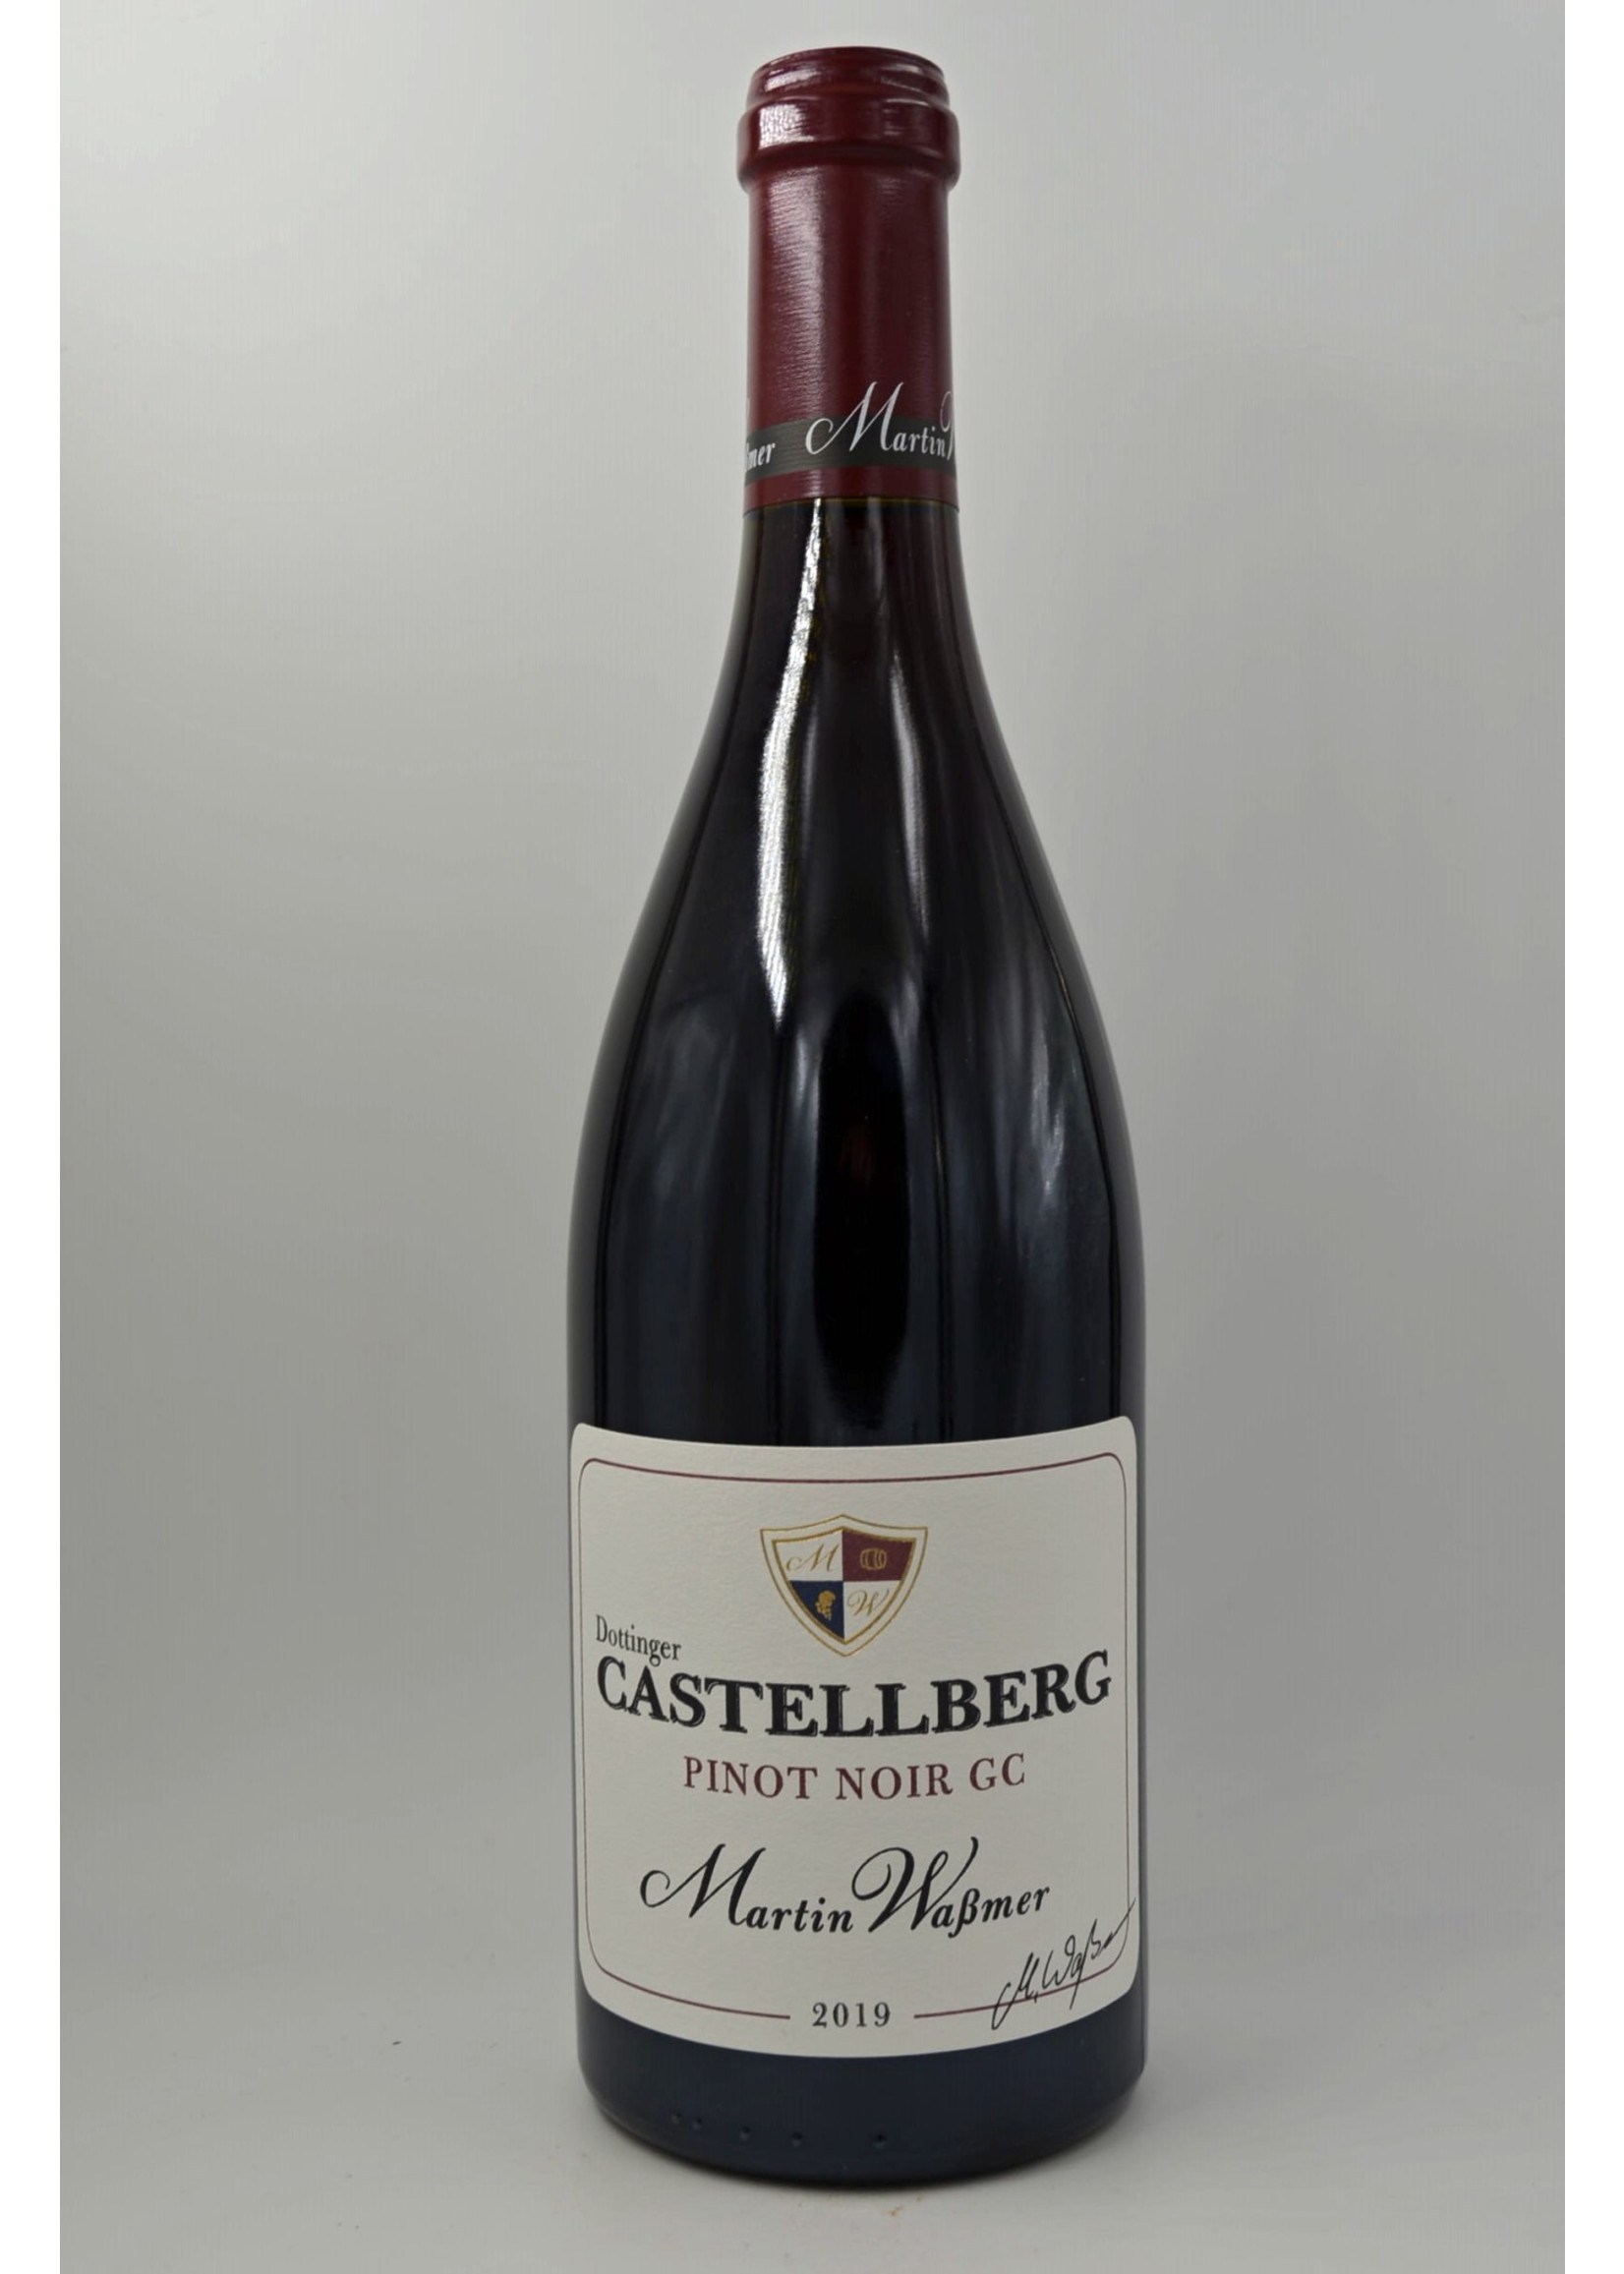 2019 Pinot Noir Dottinger Castellberg GC Martin Wassmer